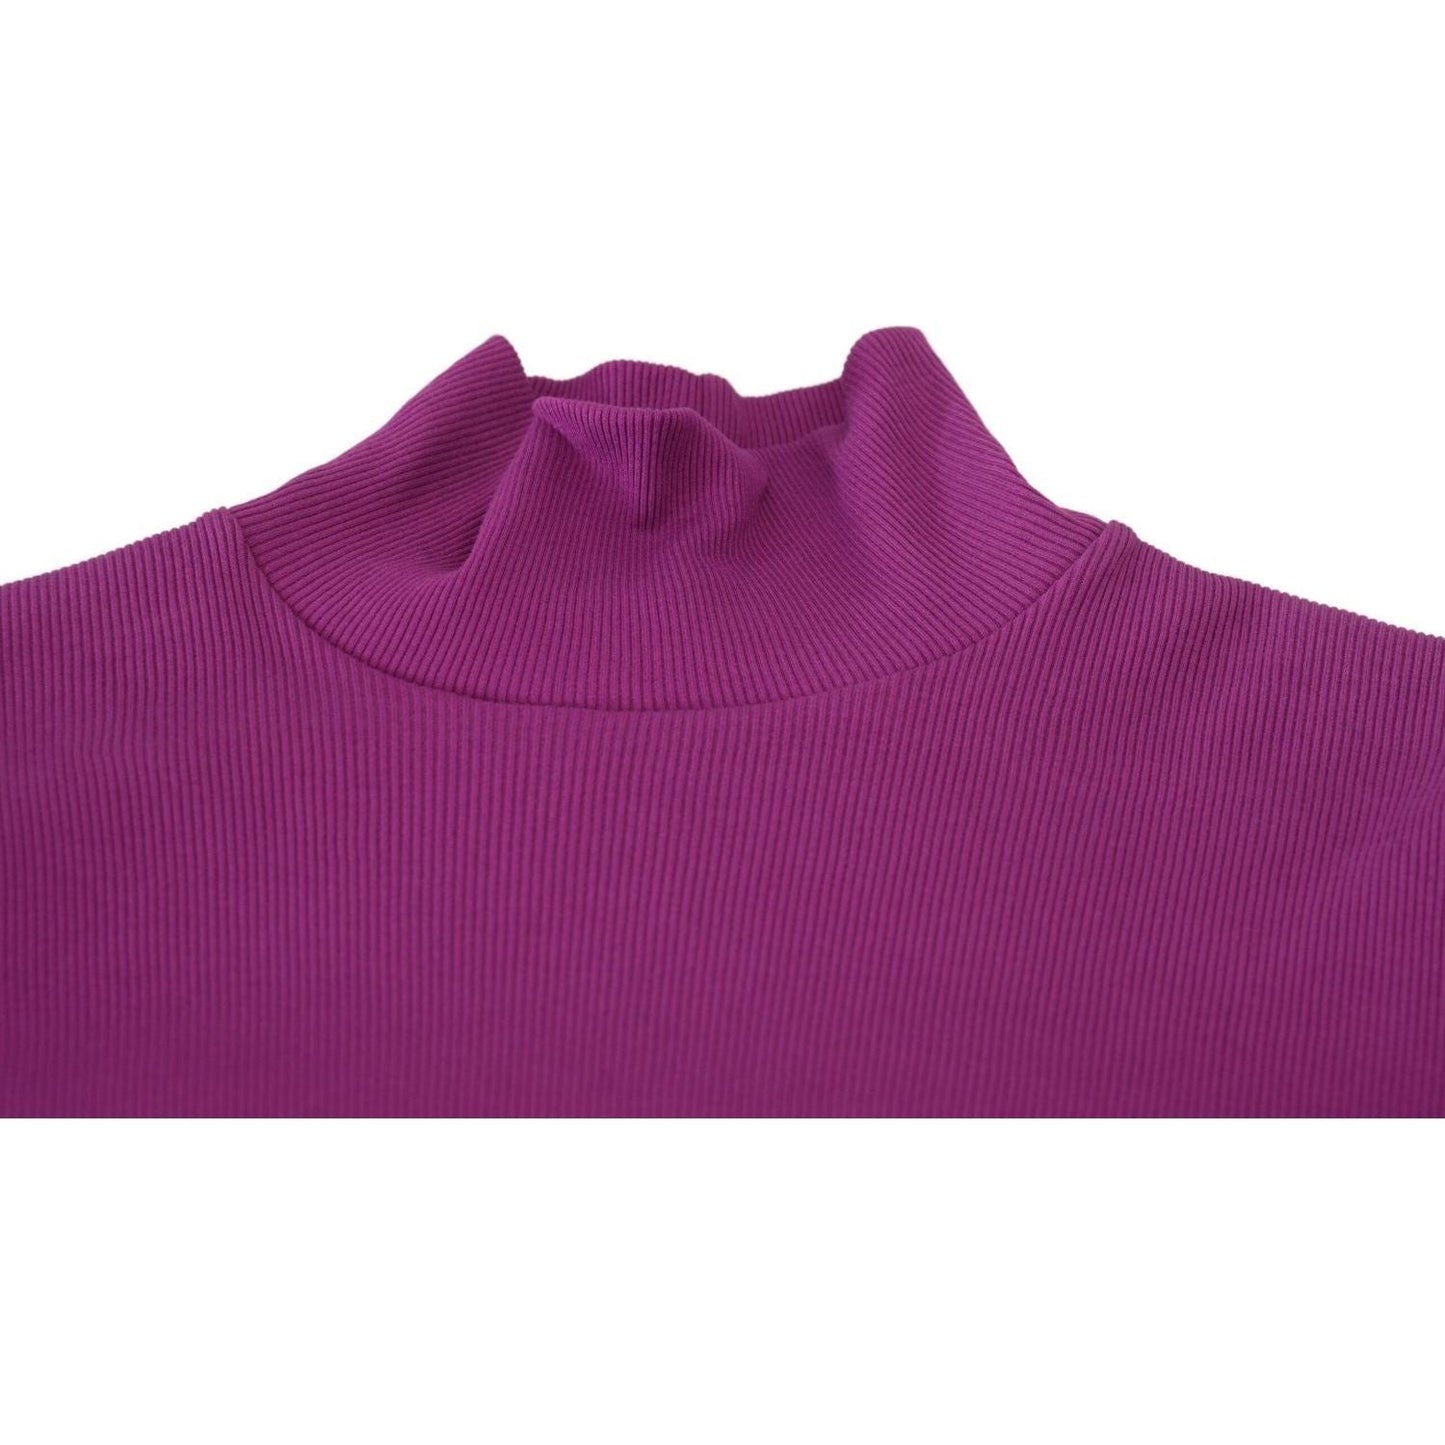 Dolce & Gabbana Elegant Purple Turtle Neck Pullover Sweater purple-turtle-neck-cropped-pullover-sweater IMG_2708-scaled-3626d80f-75e.jpg